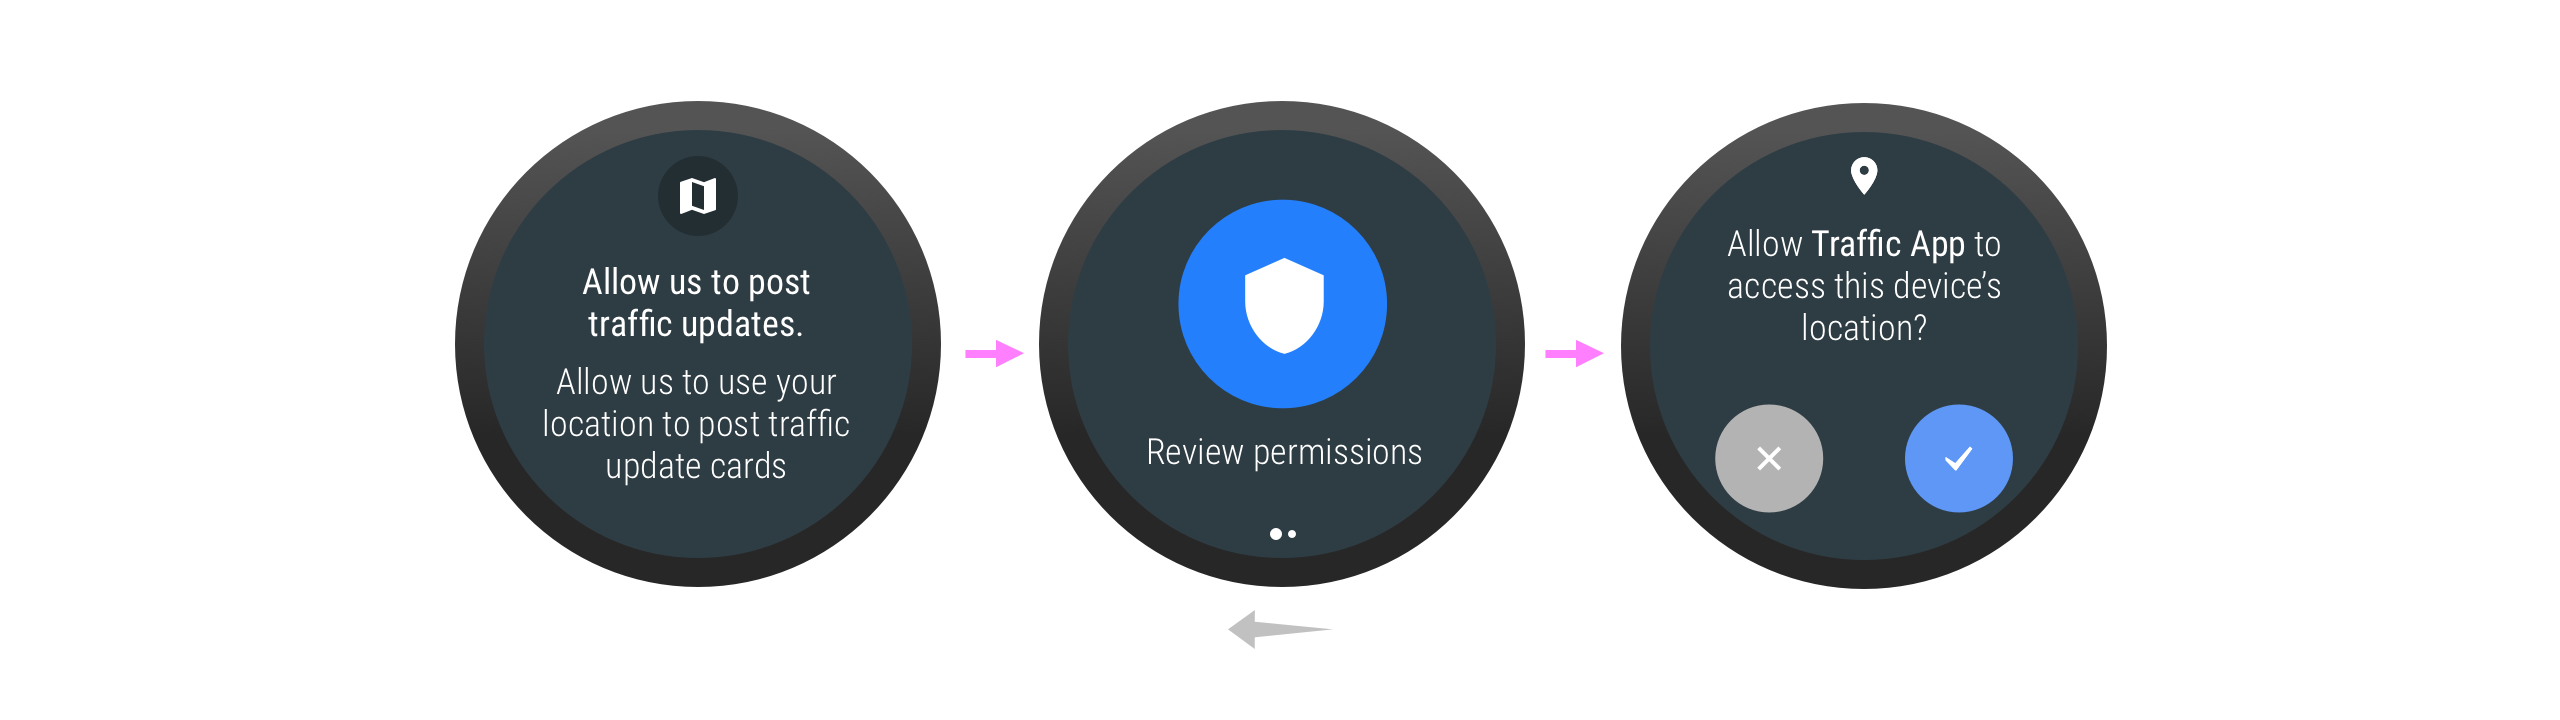 Pengguna mungkin harus memberikan izin ketika secara tidak langsung berinteraksi dengan aplikasi, melalui layanan.